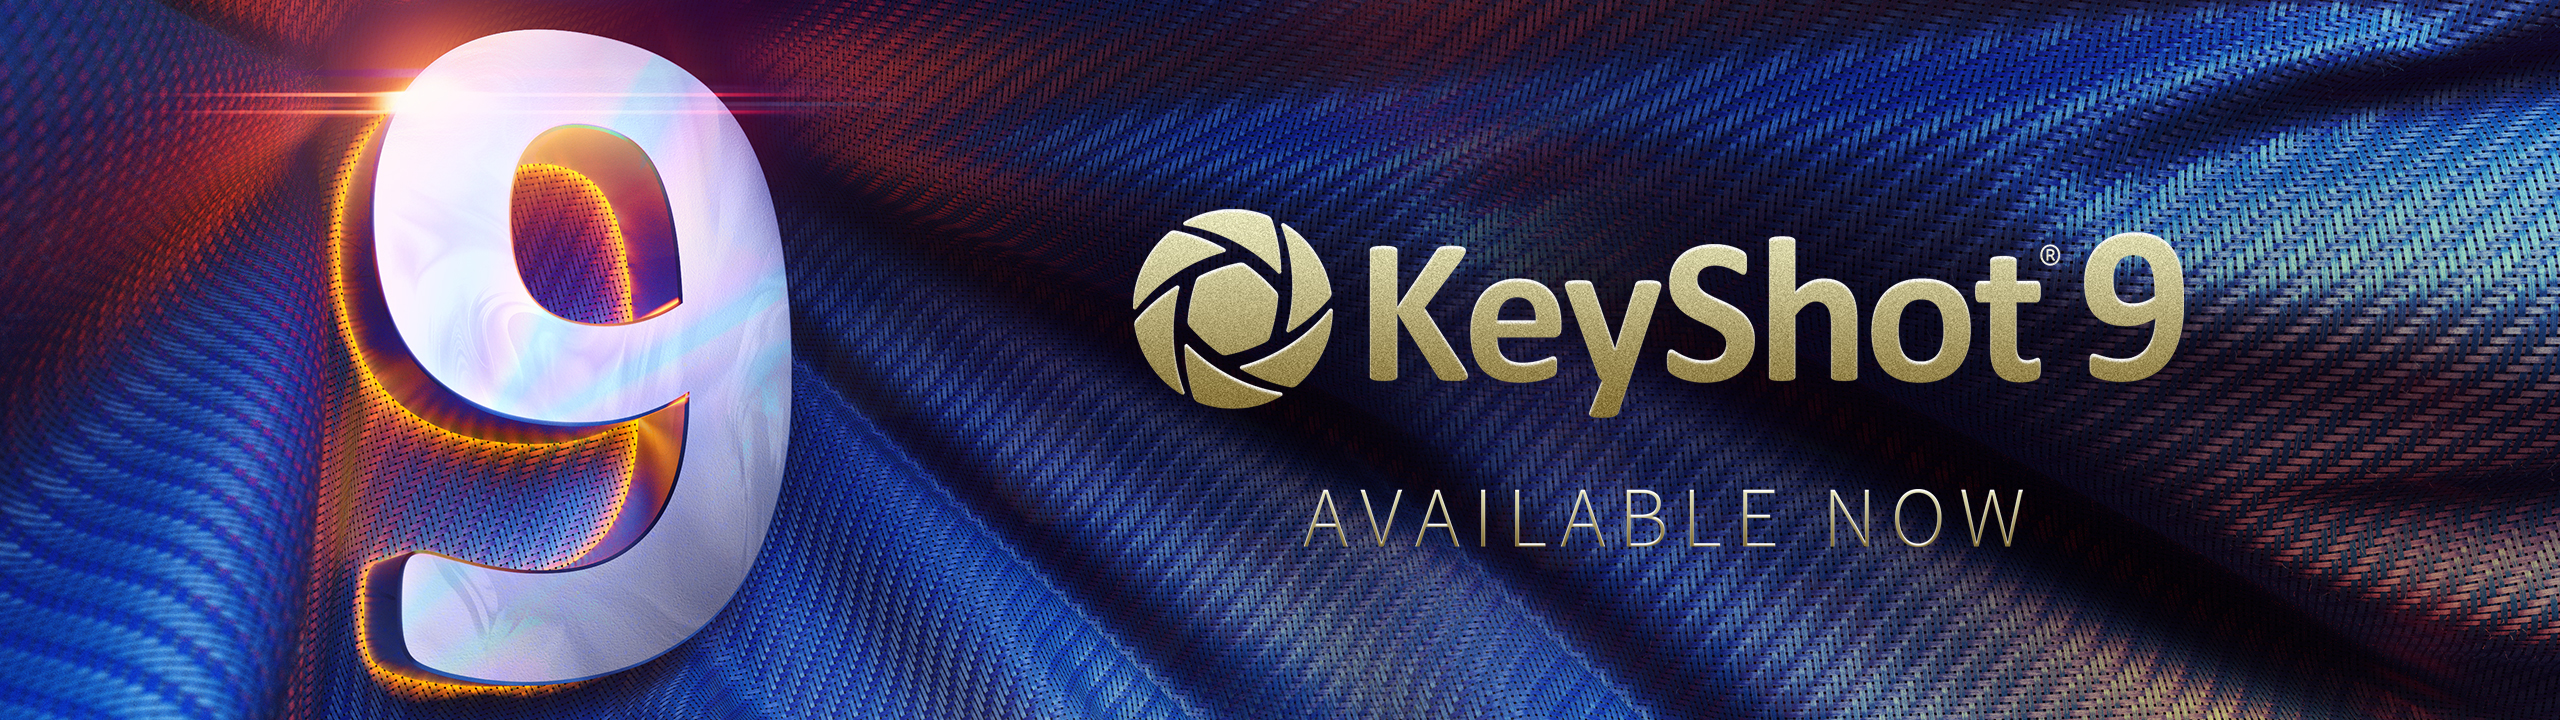 KeyShot 9 Now Available